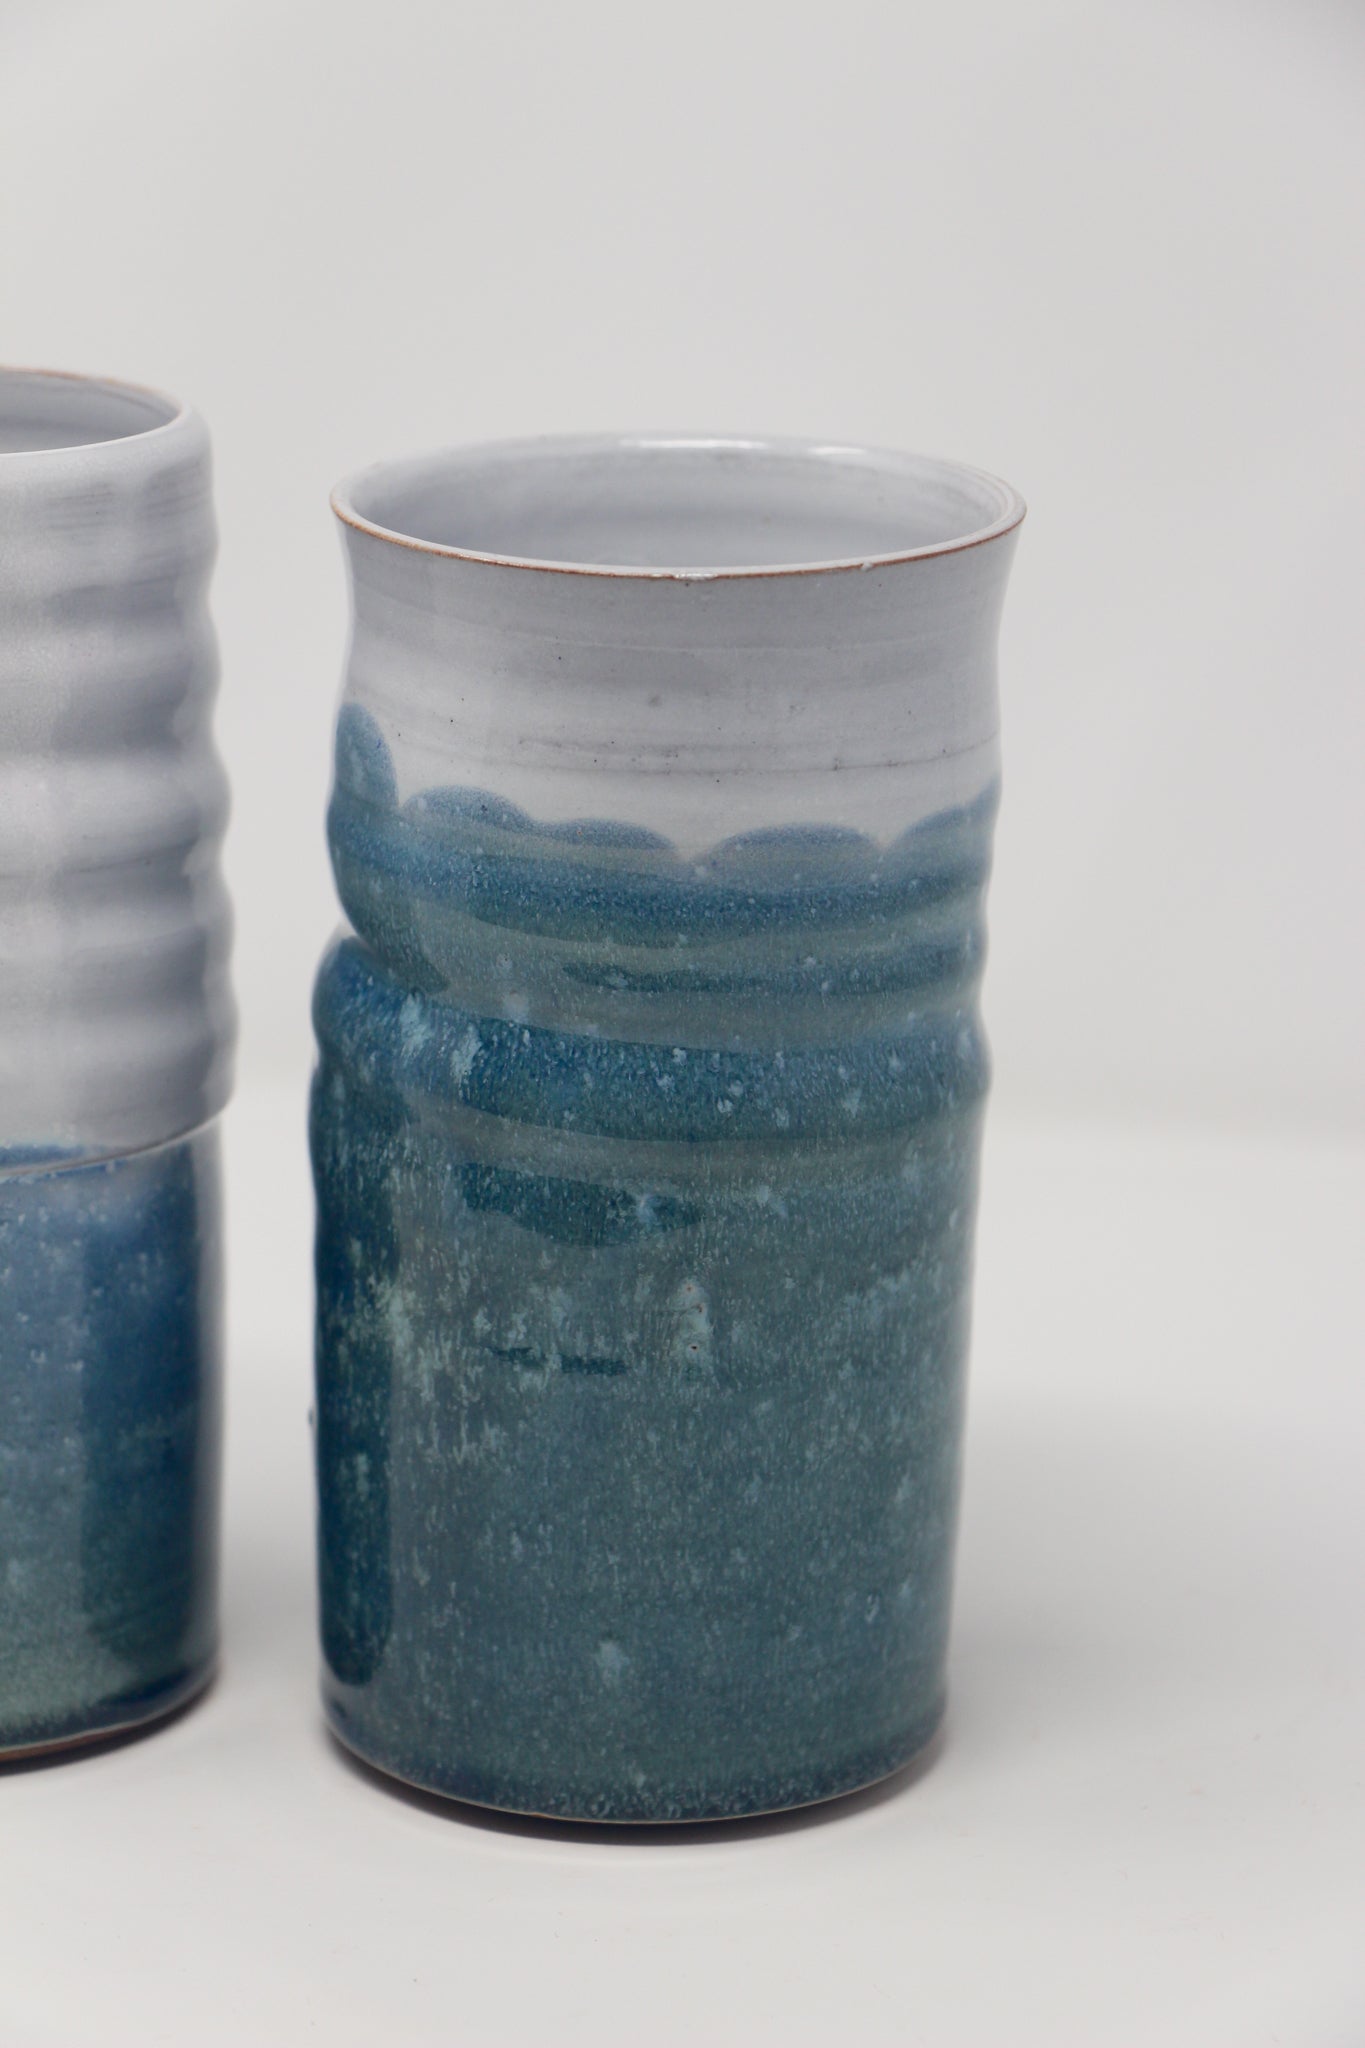 Pair of Vases, Cobaltic Sea & White